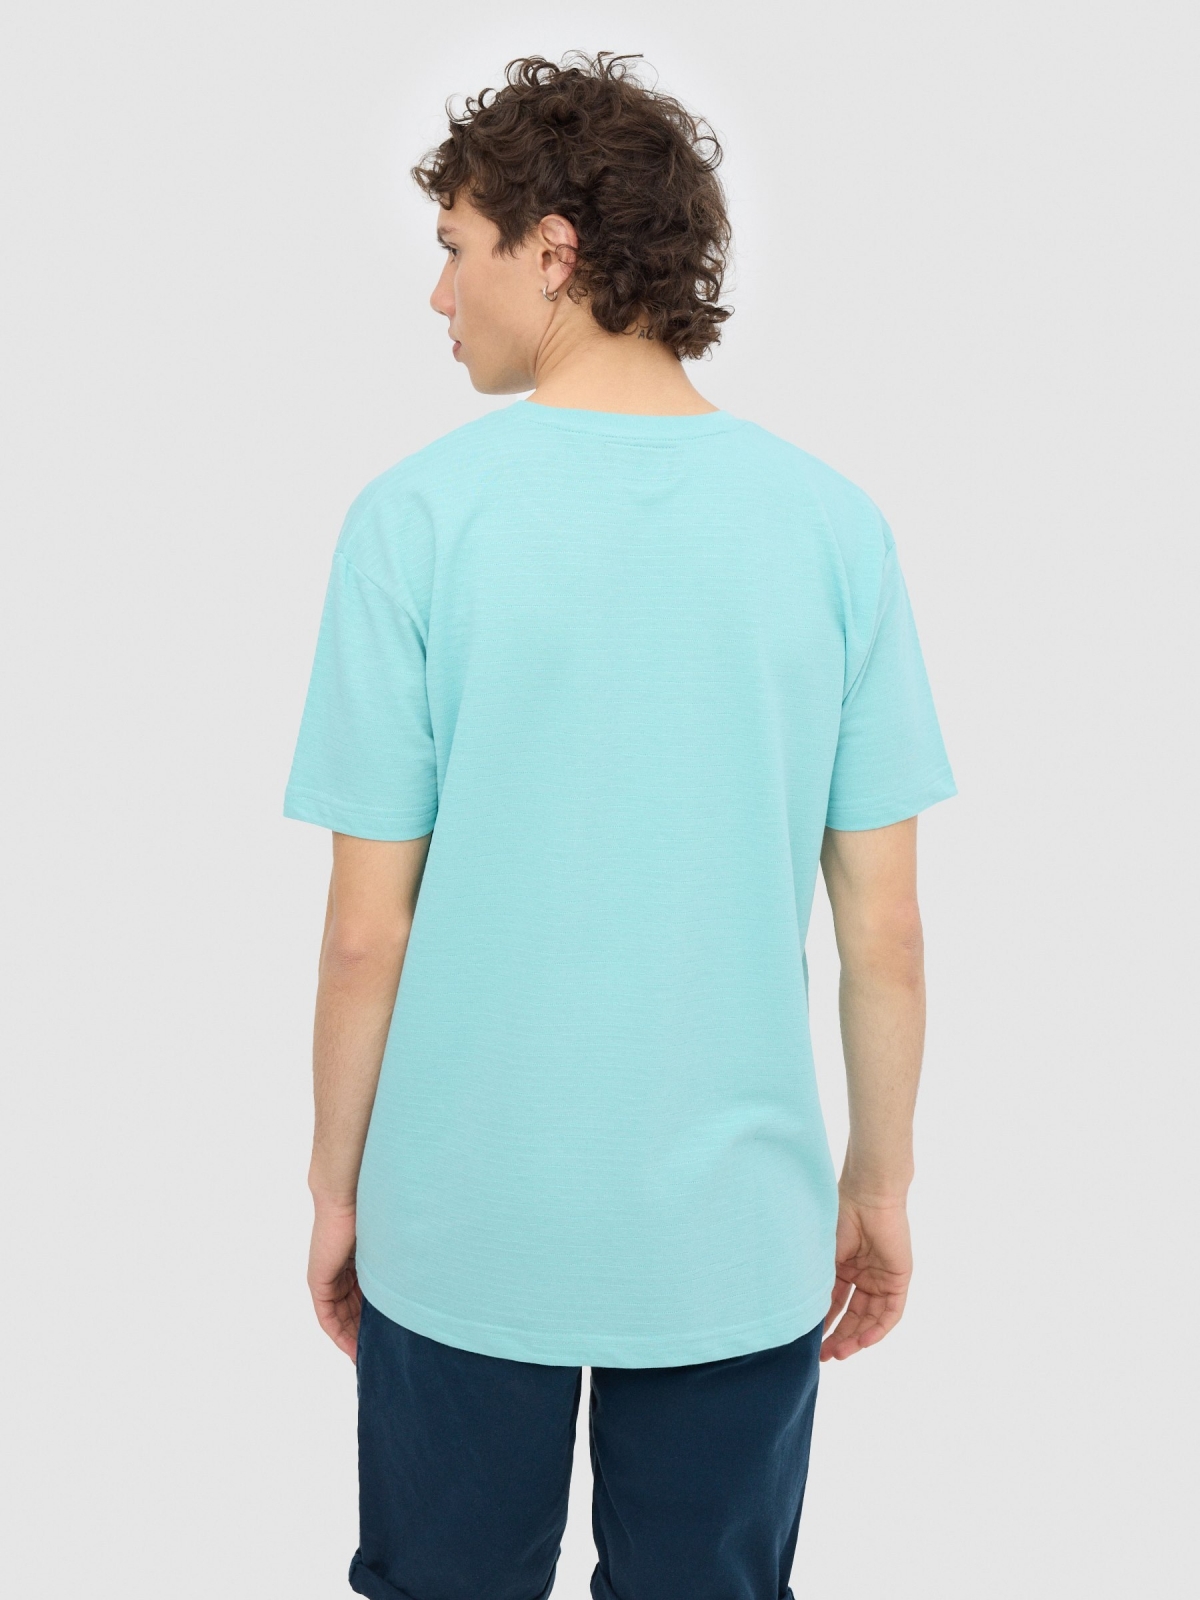 Camiseta rayas azul claro vista media trasera